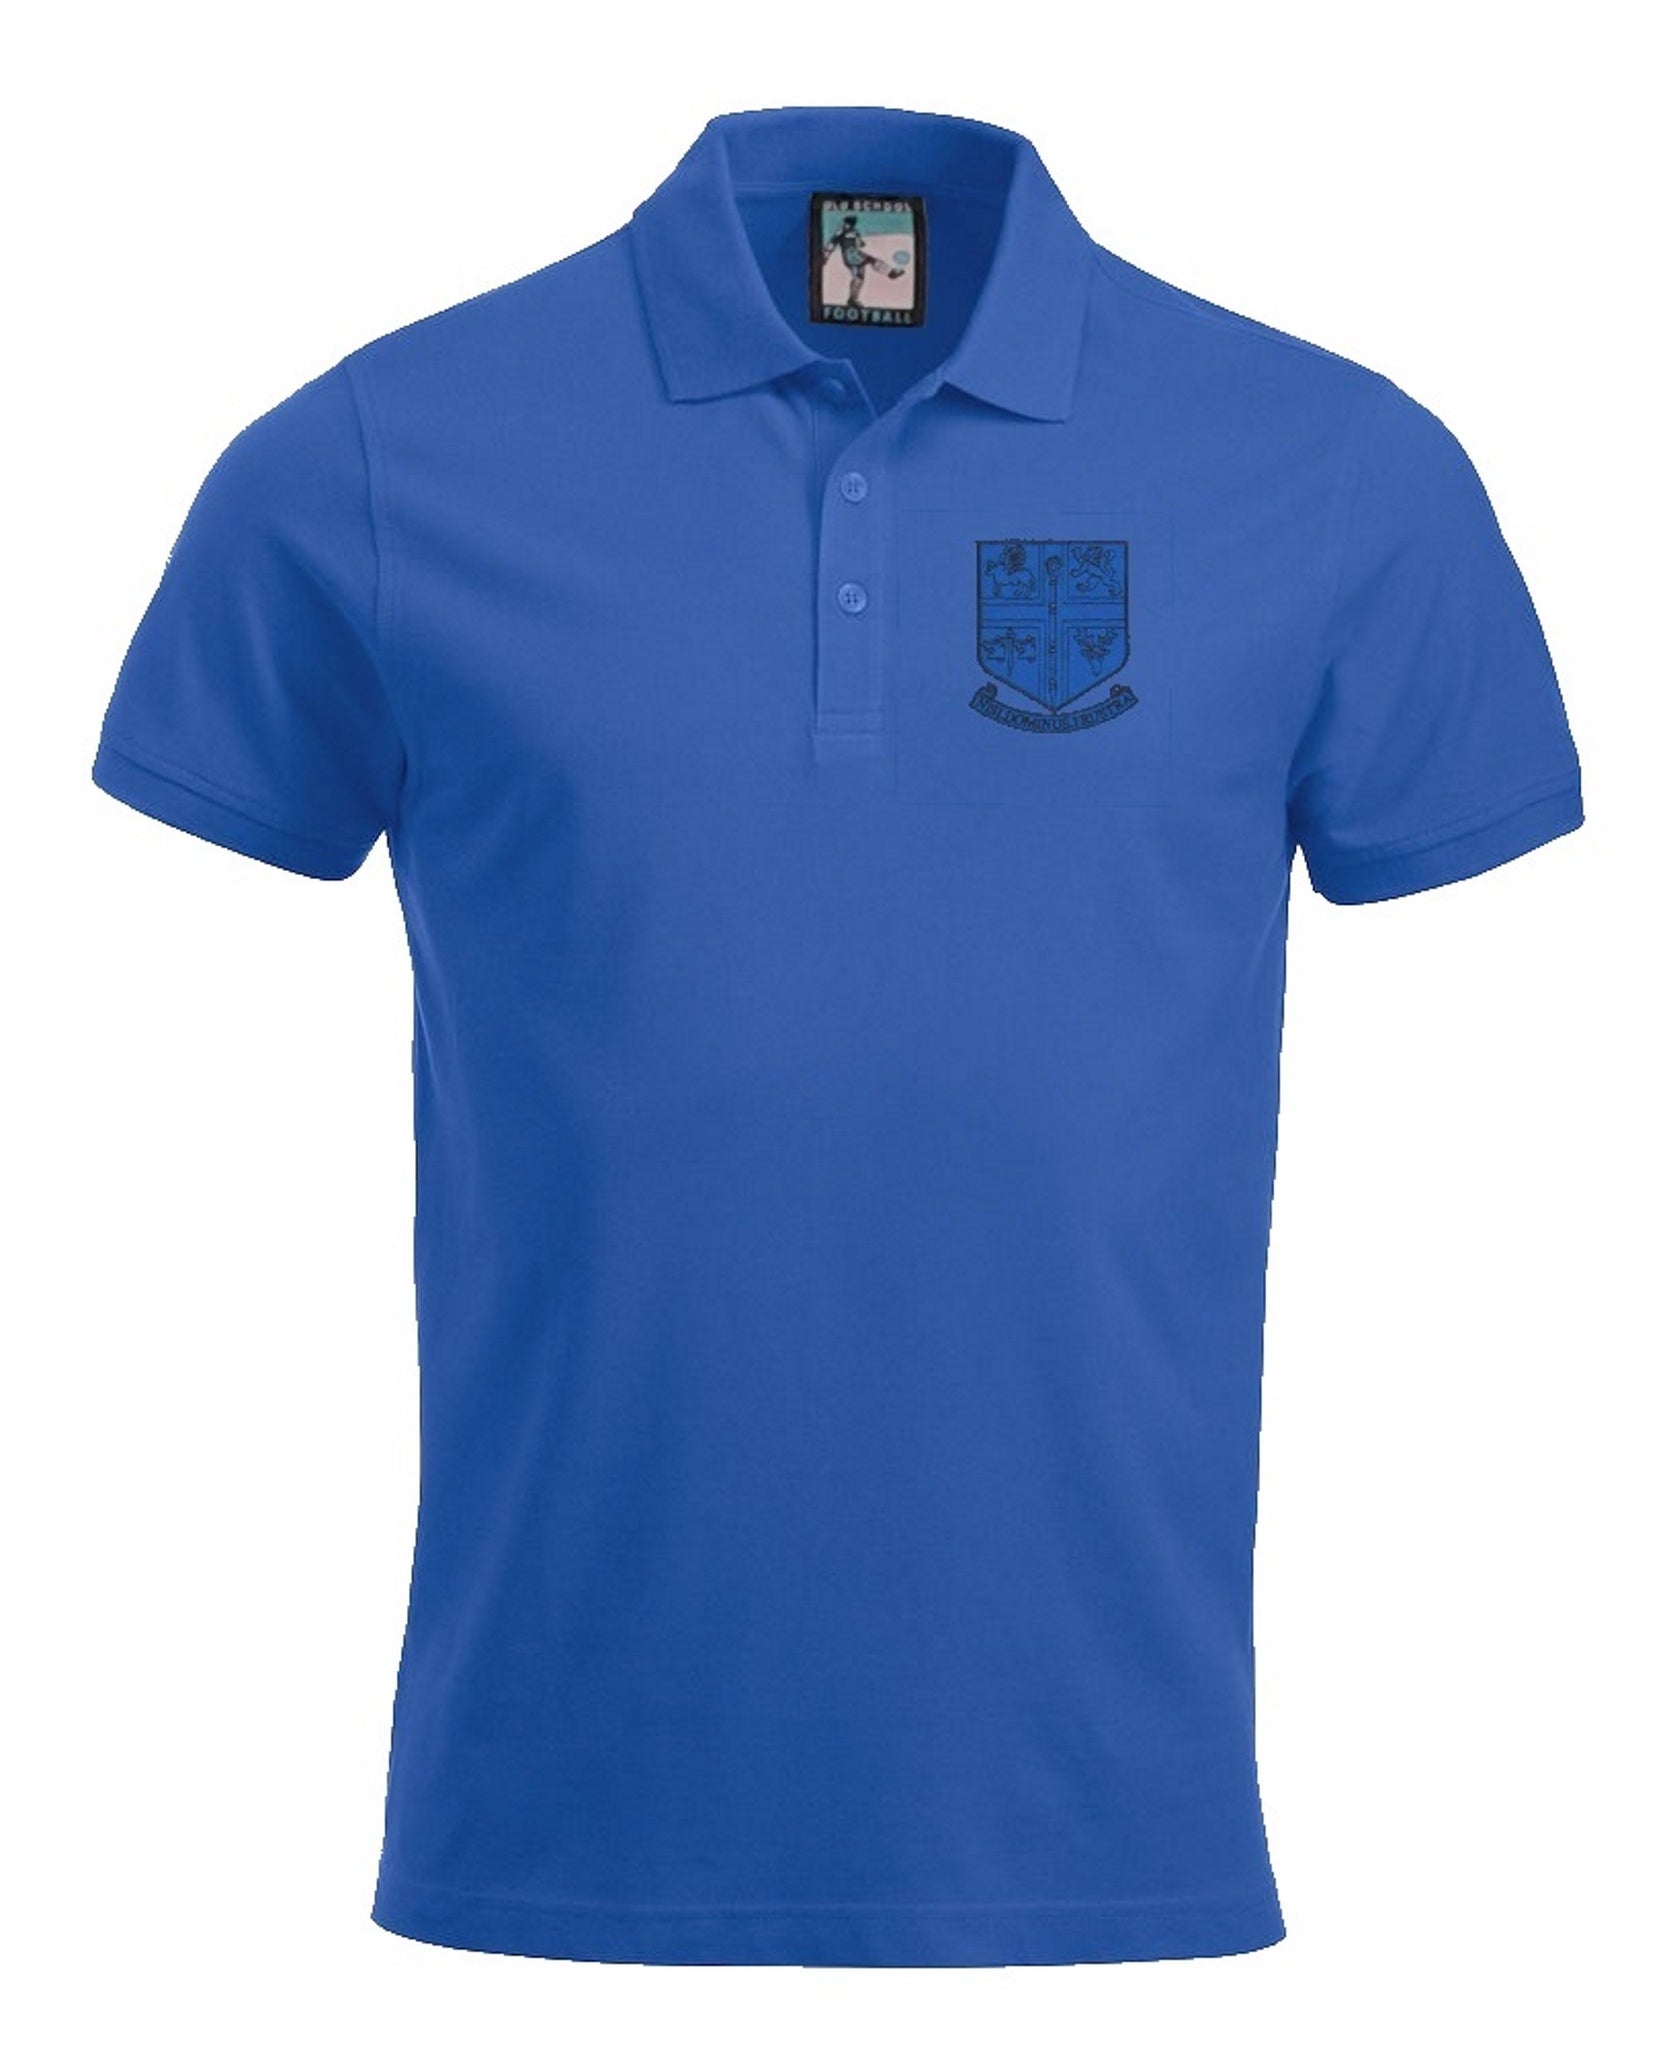 Chelsea Retro Football Polo Shirt 1905 - Polo